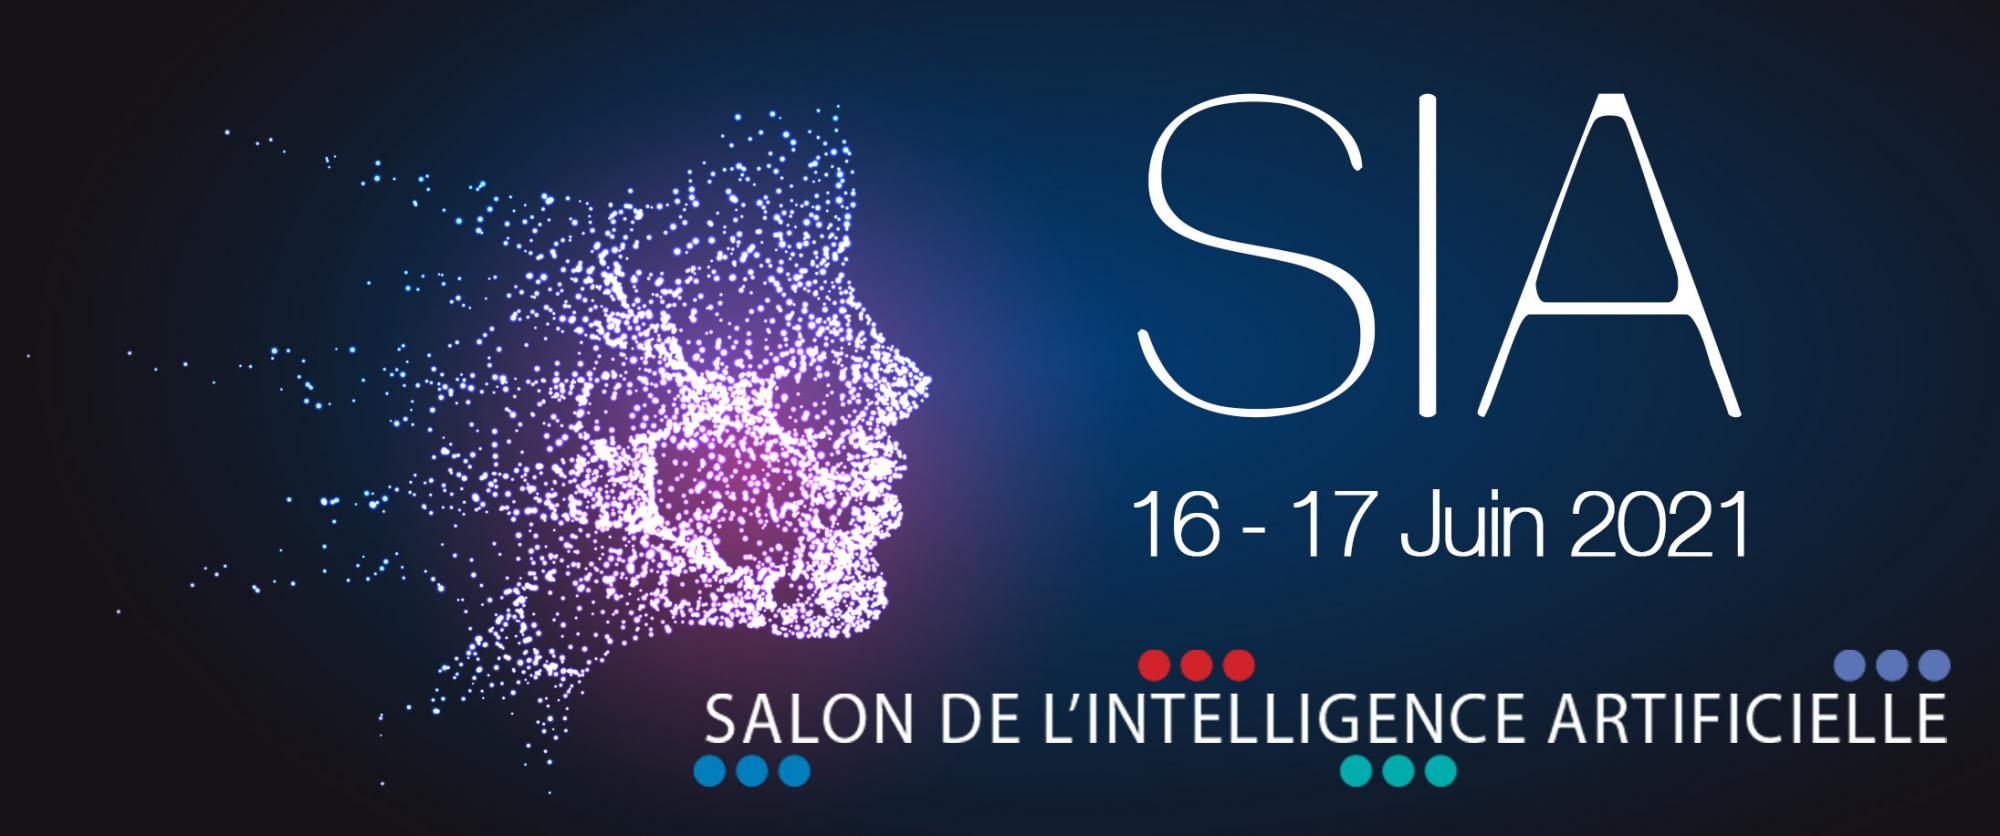 Salon de l'Intelligence Artificielle en Juin 2021 : 100% Digital et Interactif